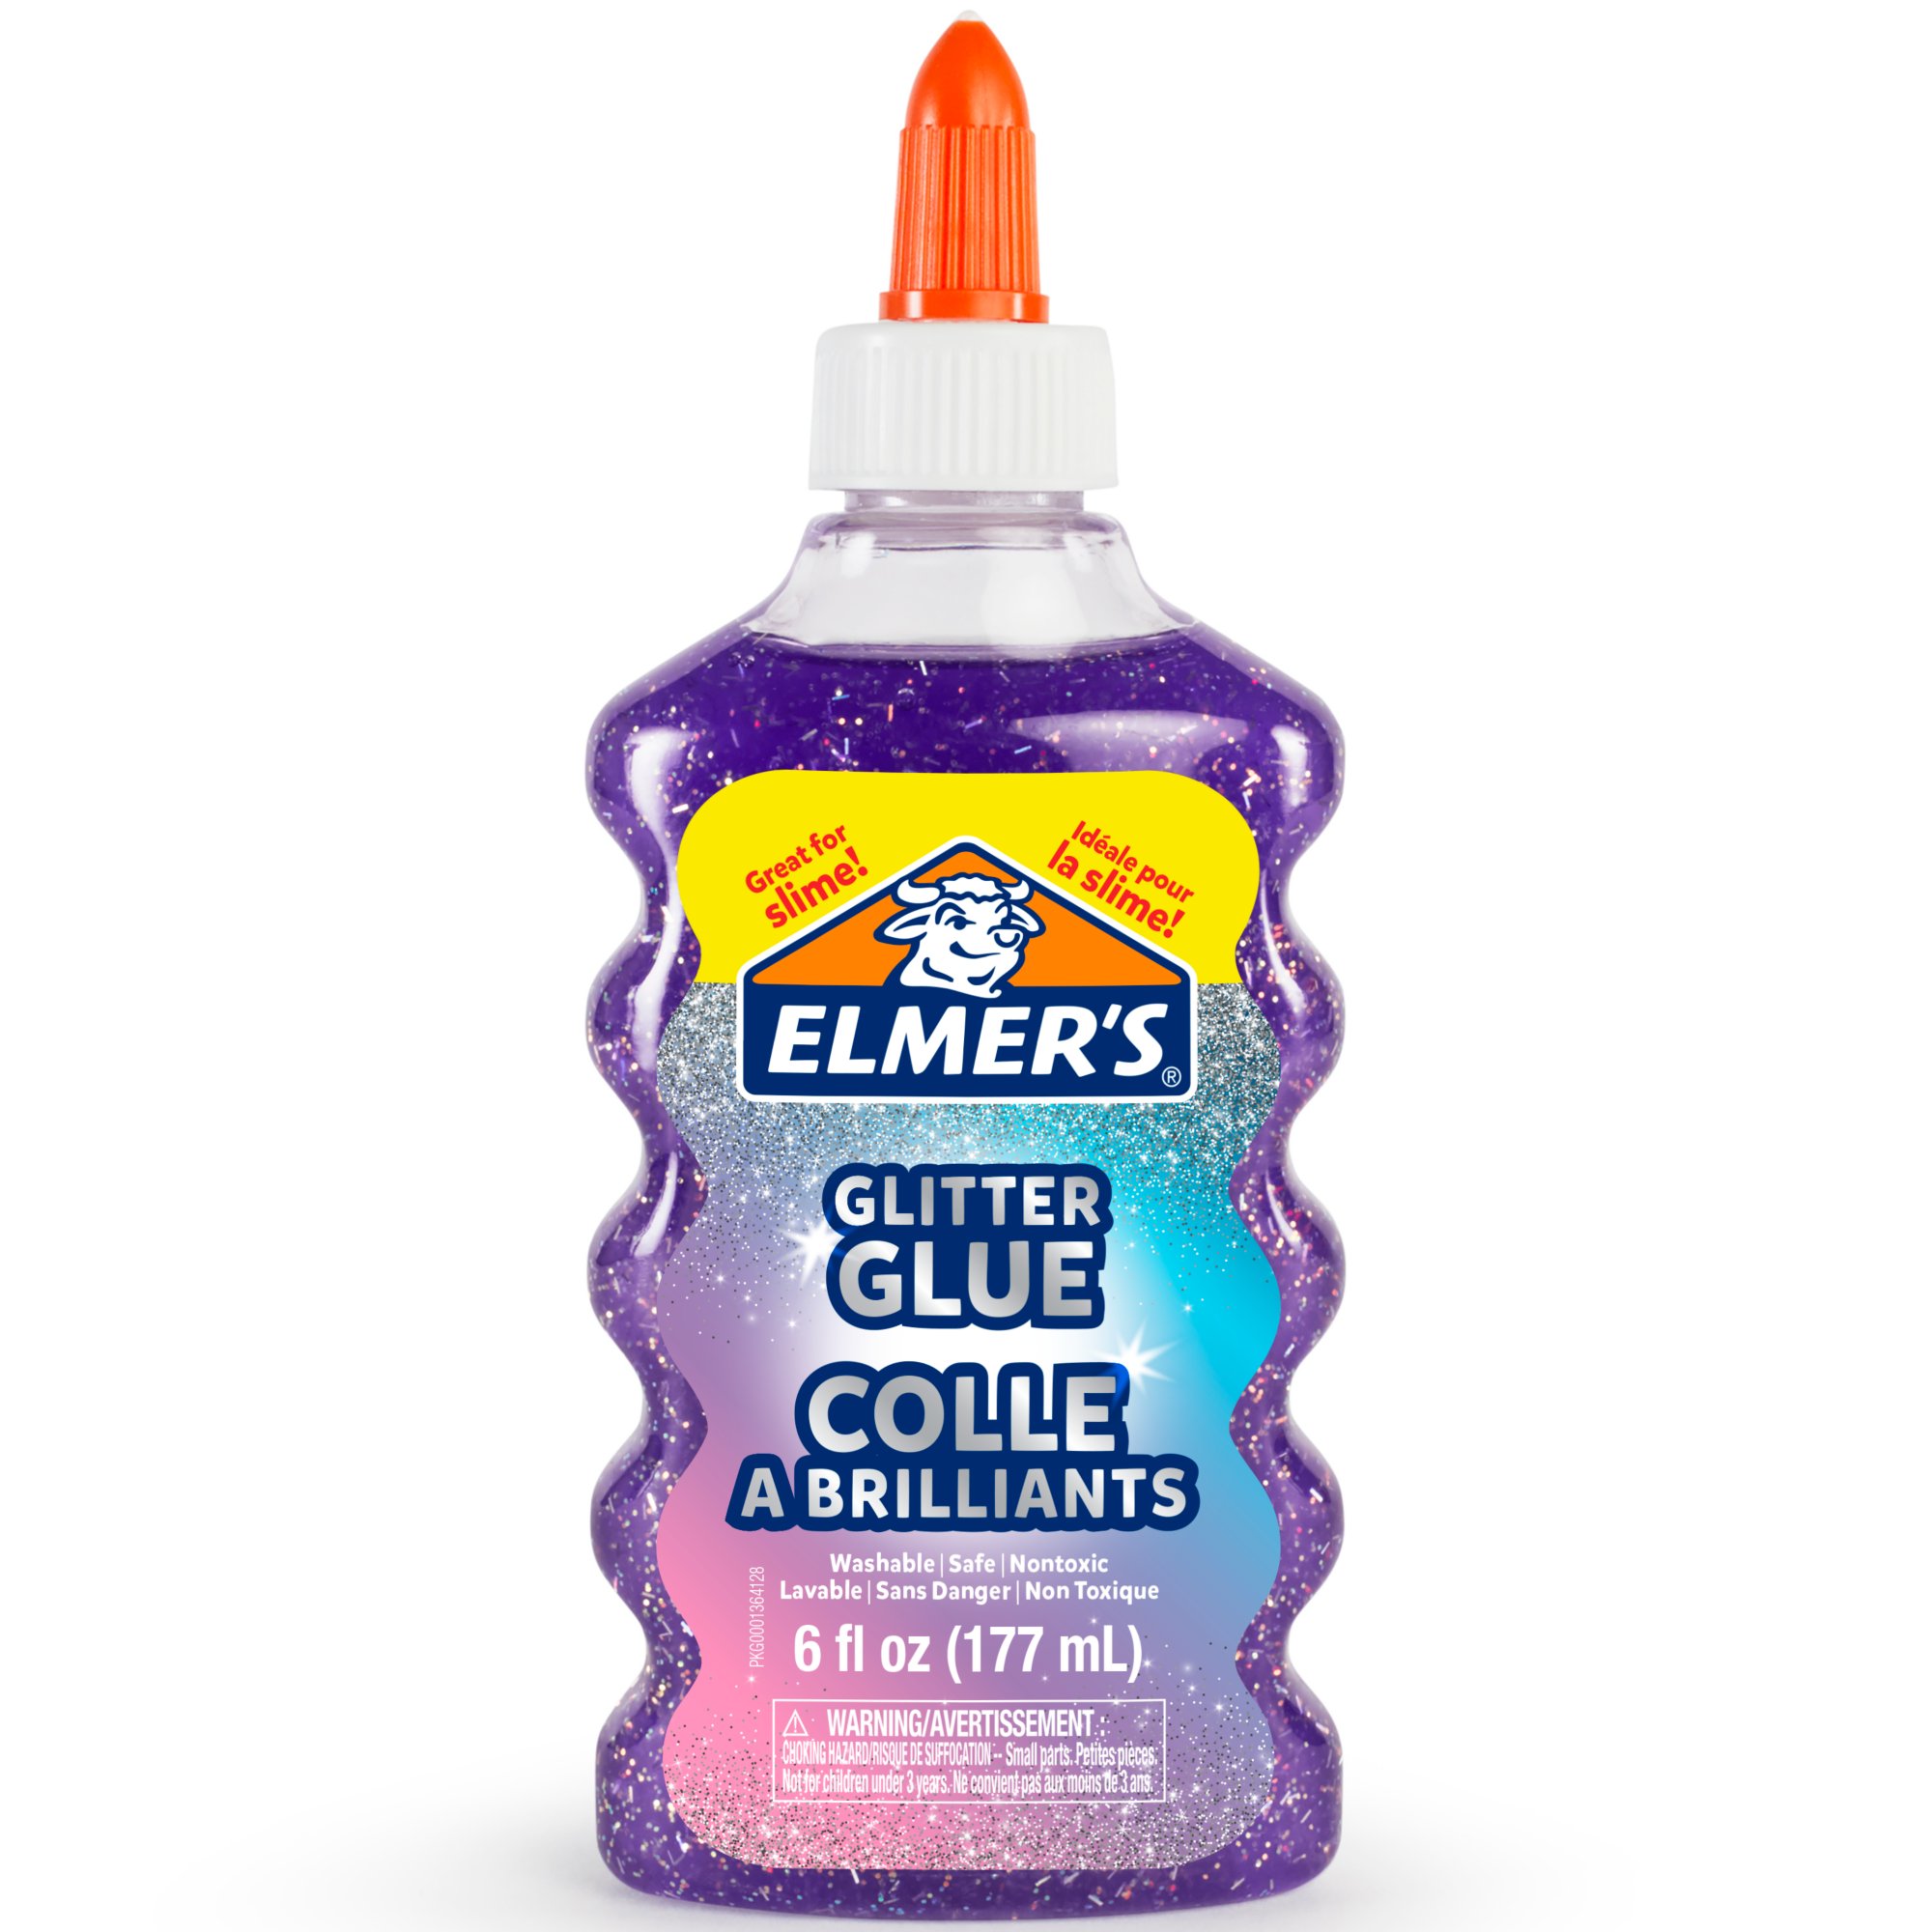 Elmers Glue Glitter pakket. Glitterslijm maken die altijd lukt! NU met  extra 118ML